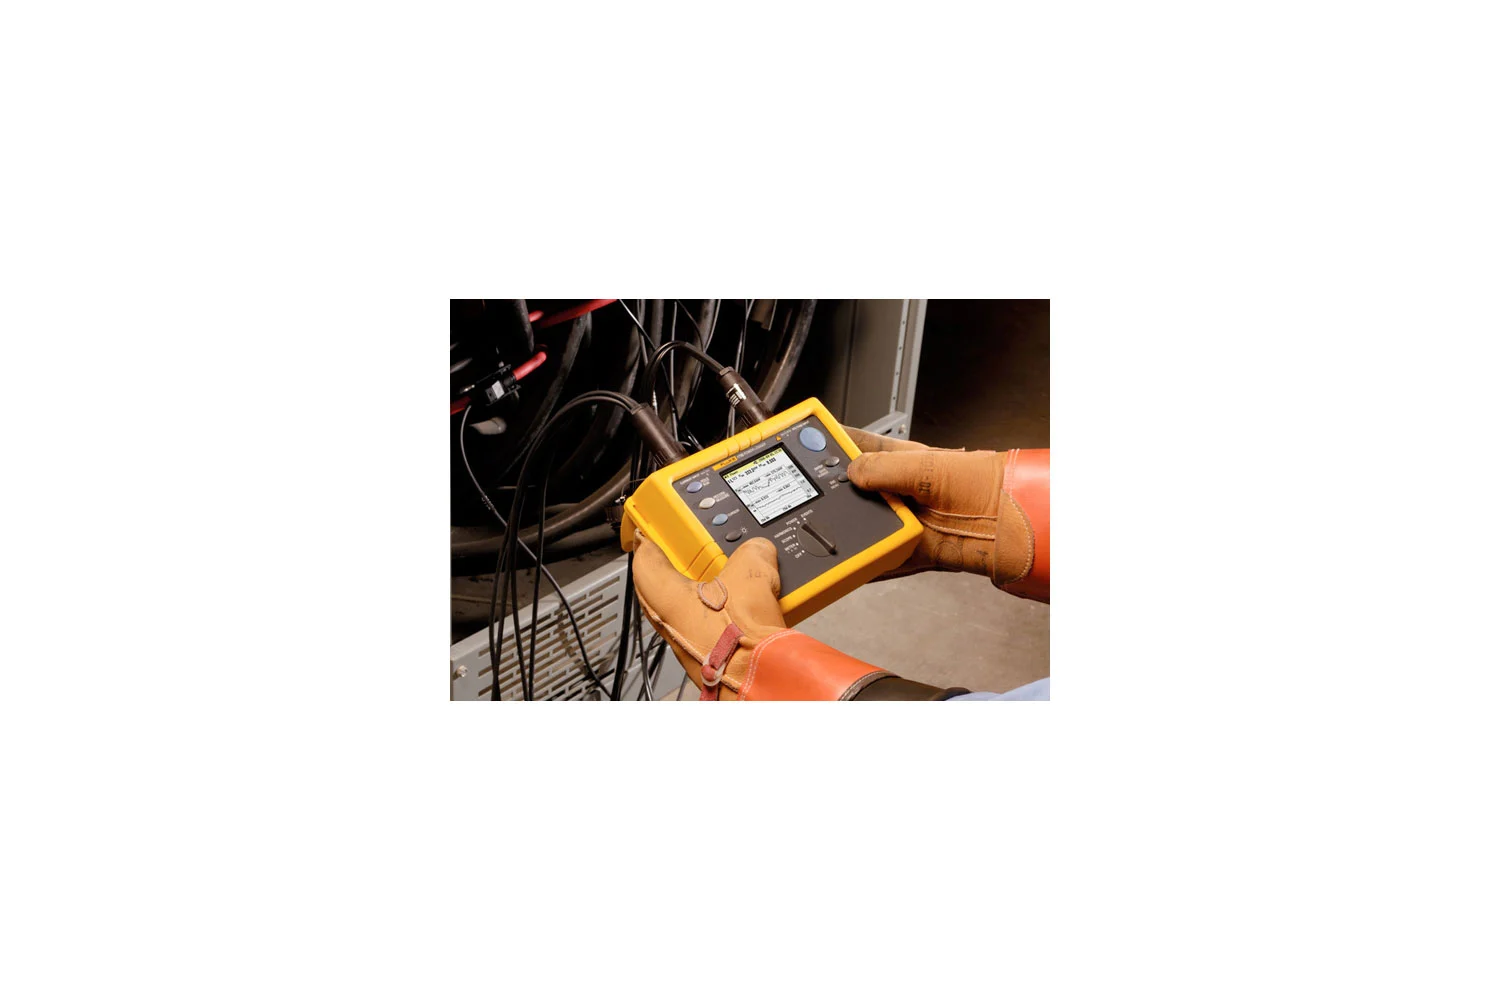 437 Series II 400 Hz Power Quality Monitor and Energy Analyzer